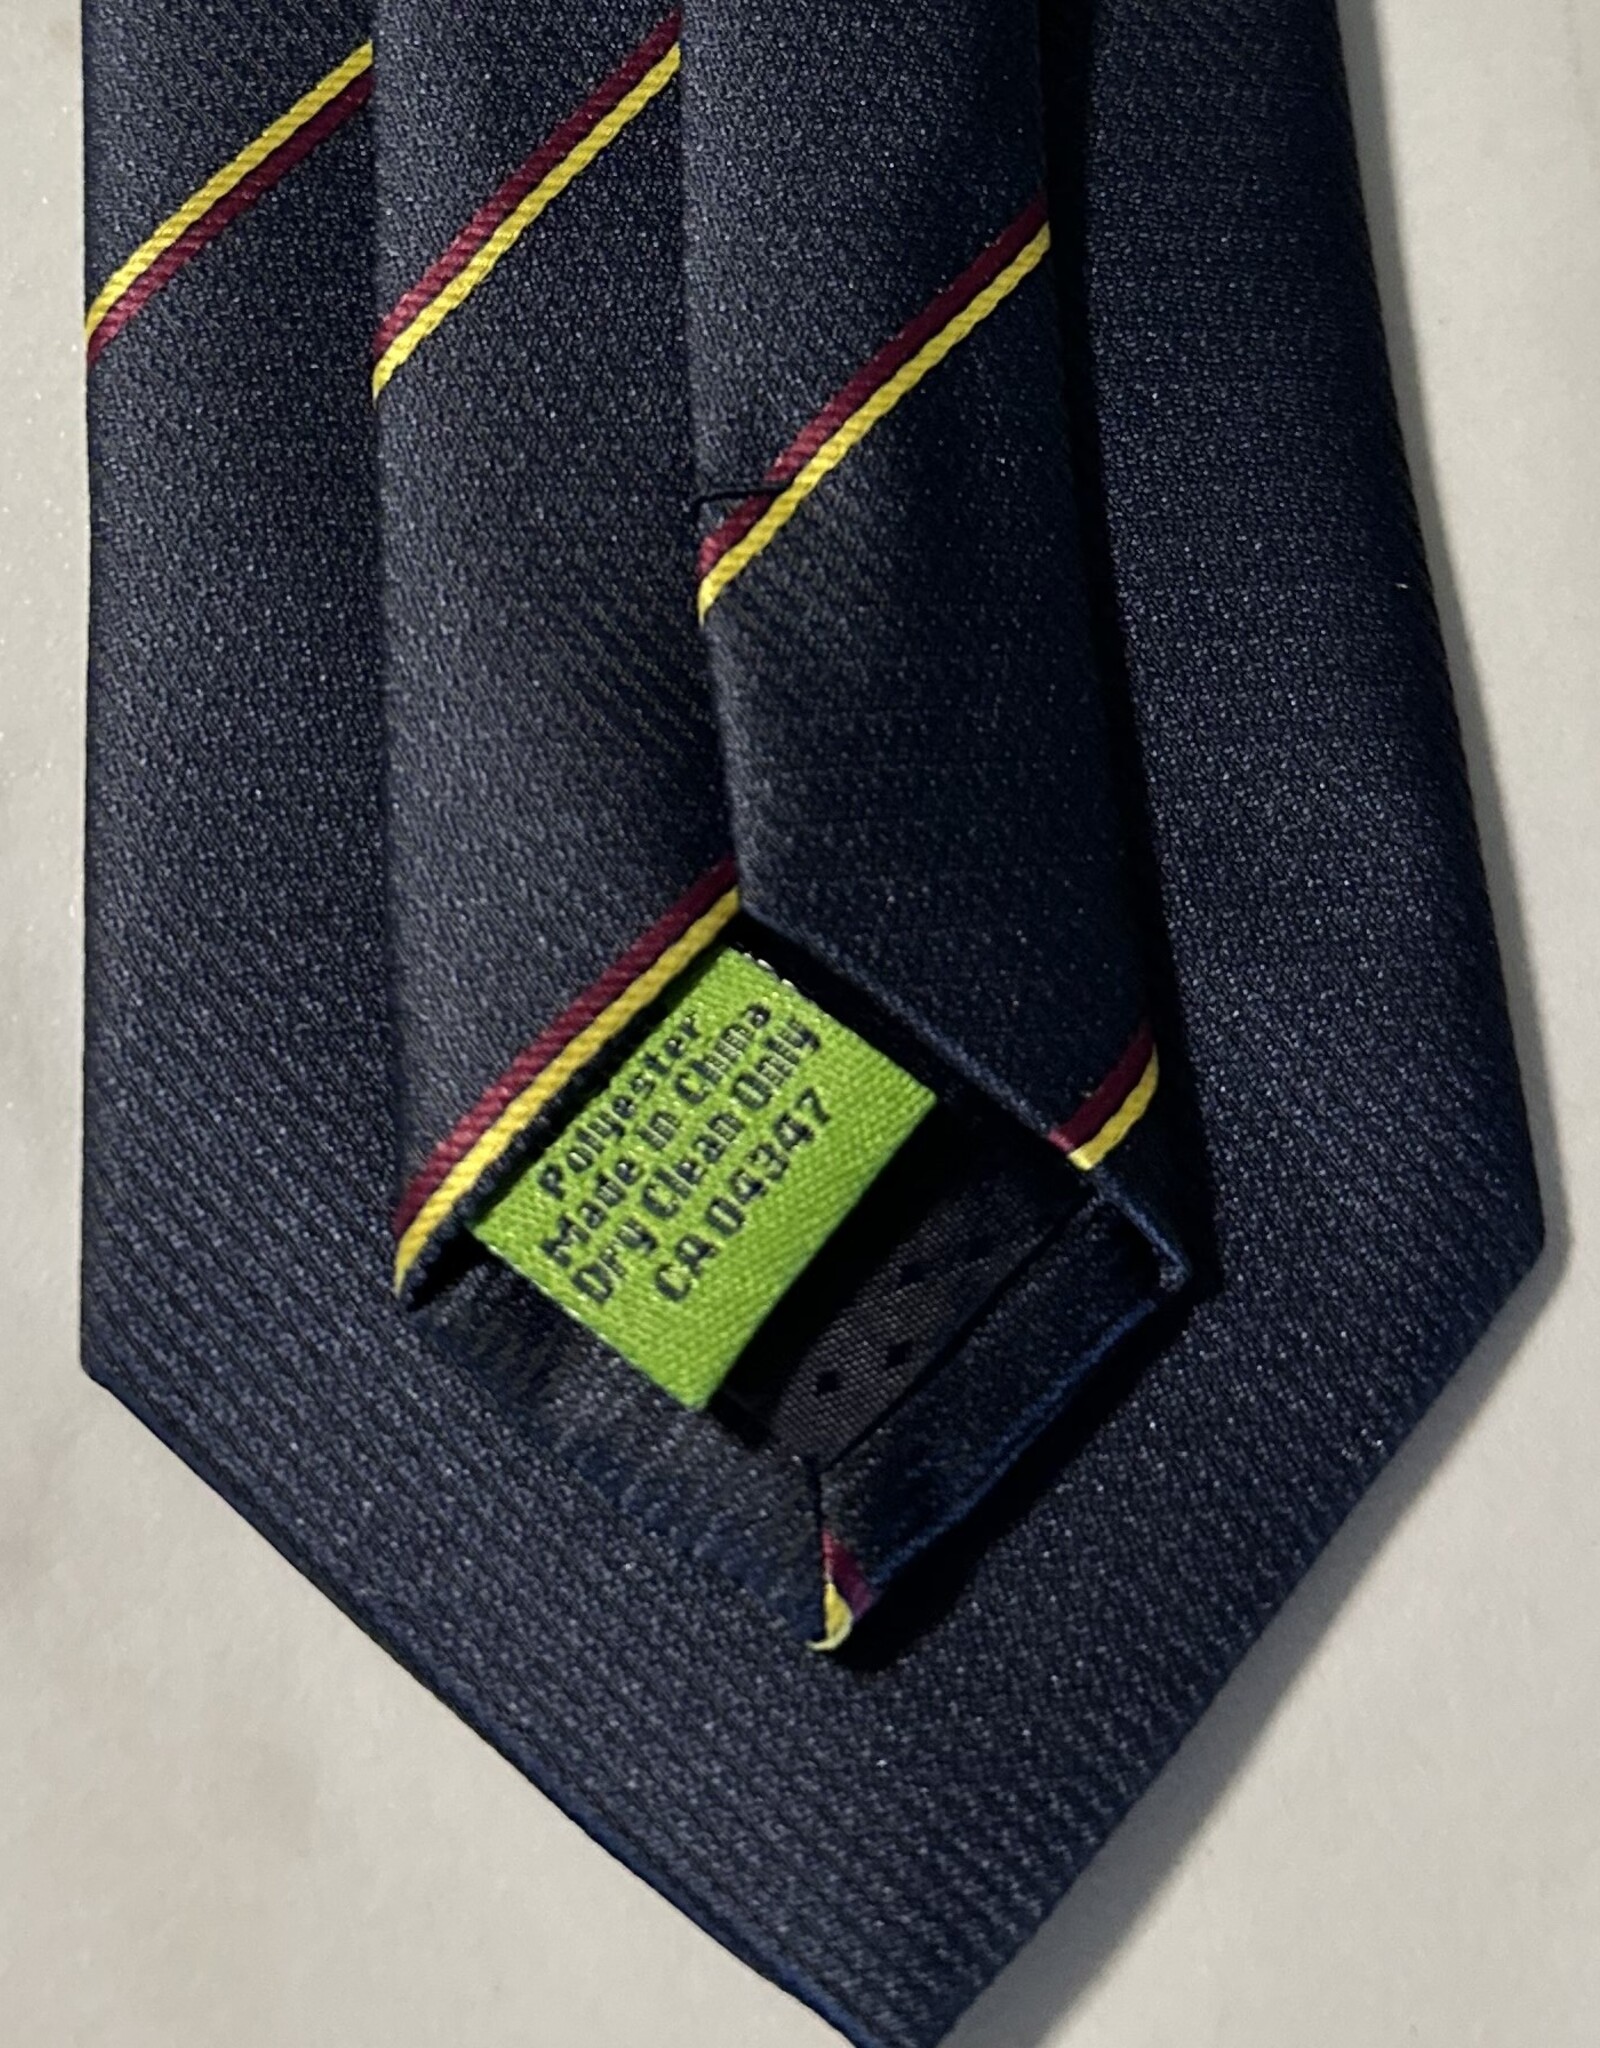 Gentry Neckwear Adult Tie - Sustainable